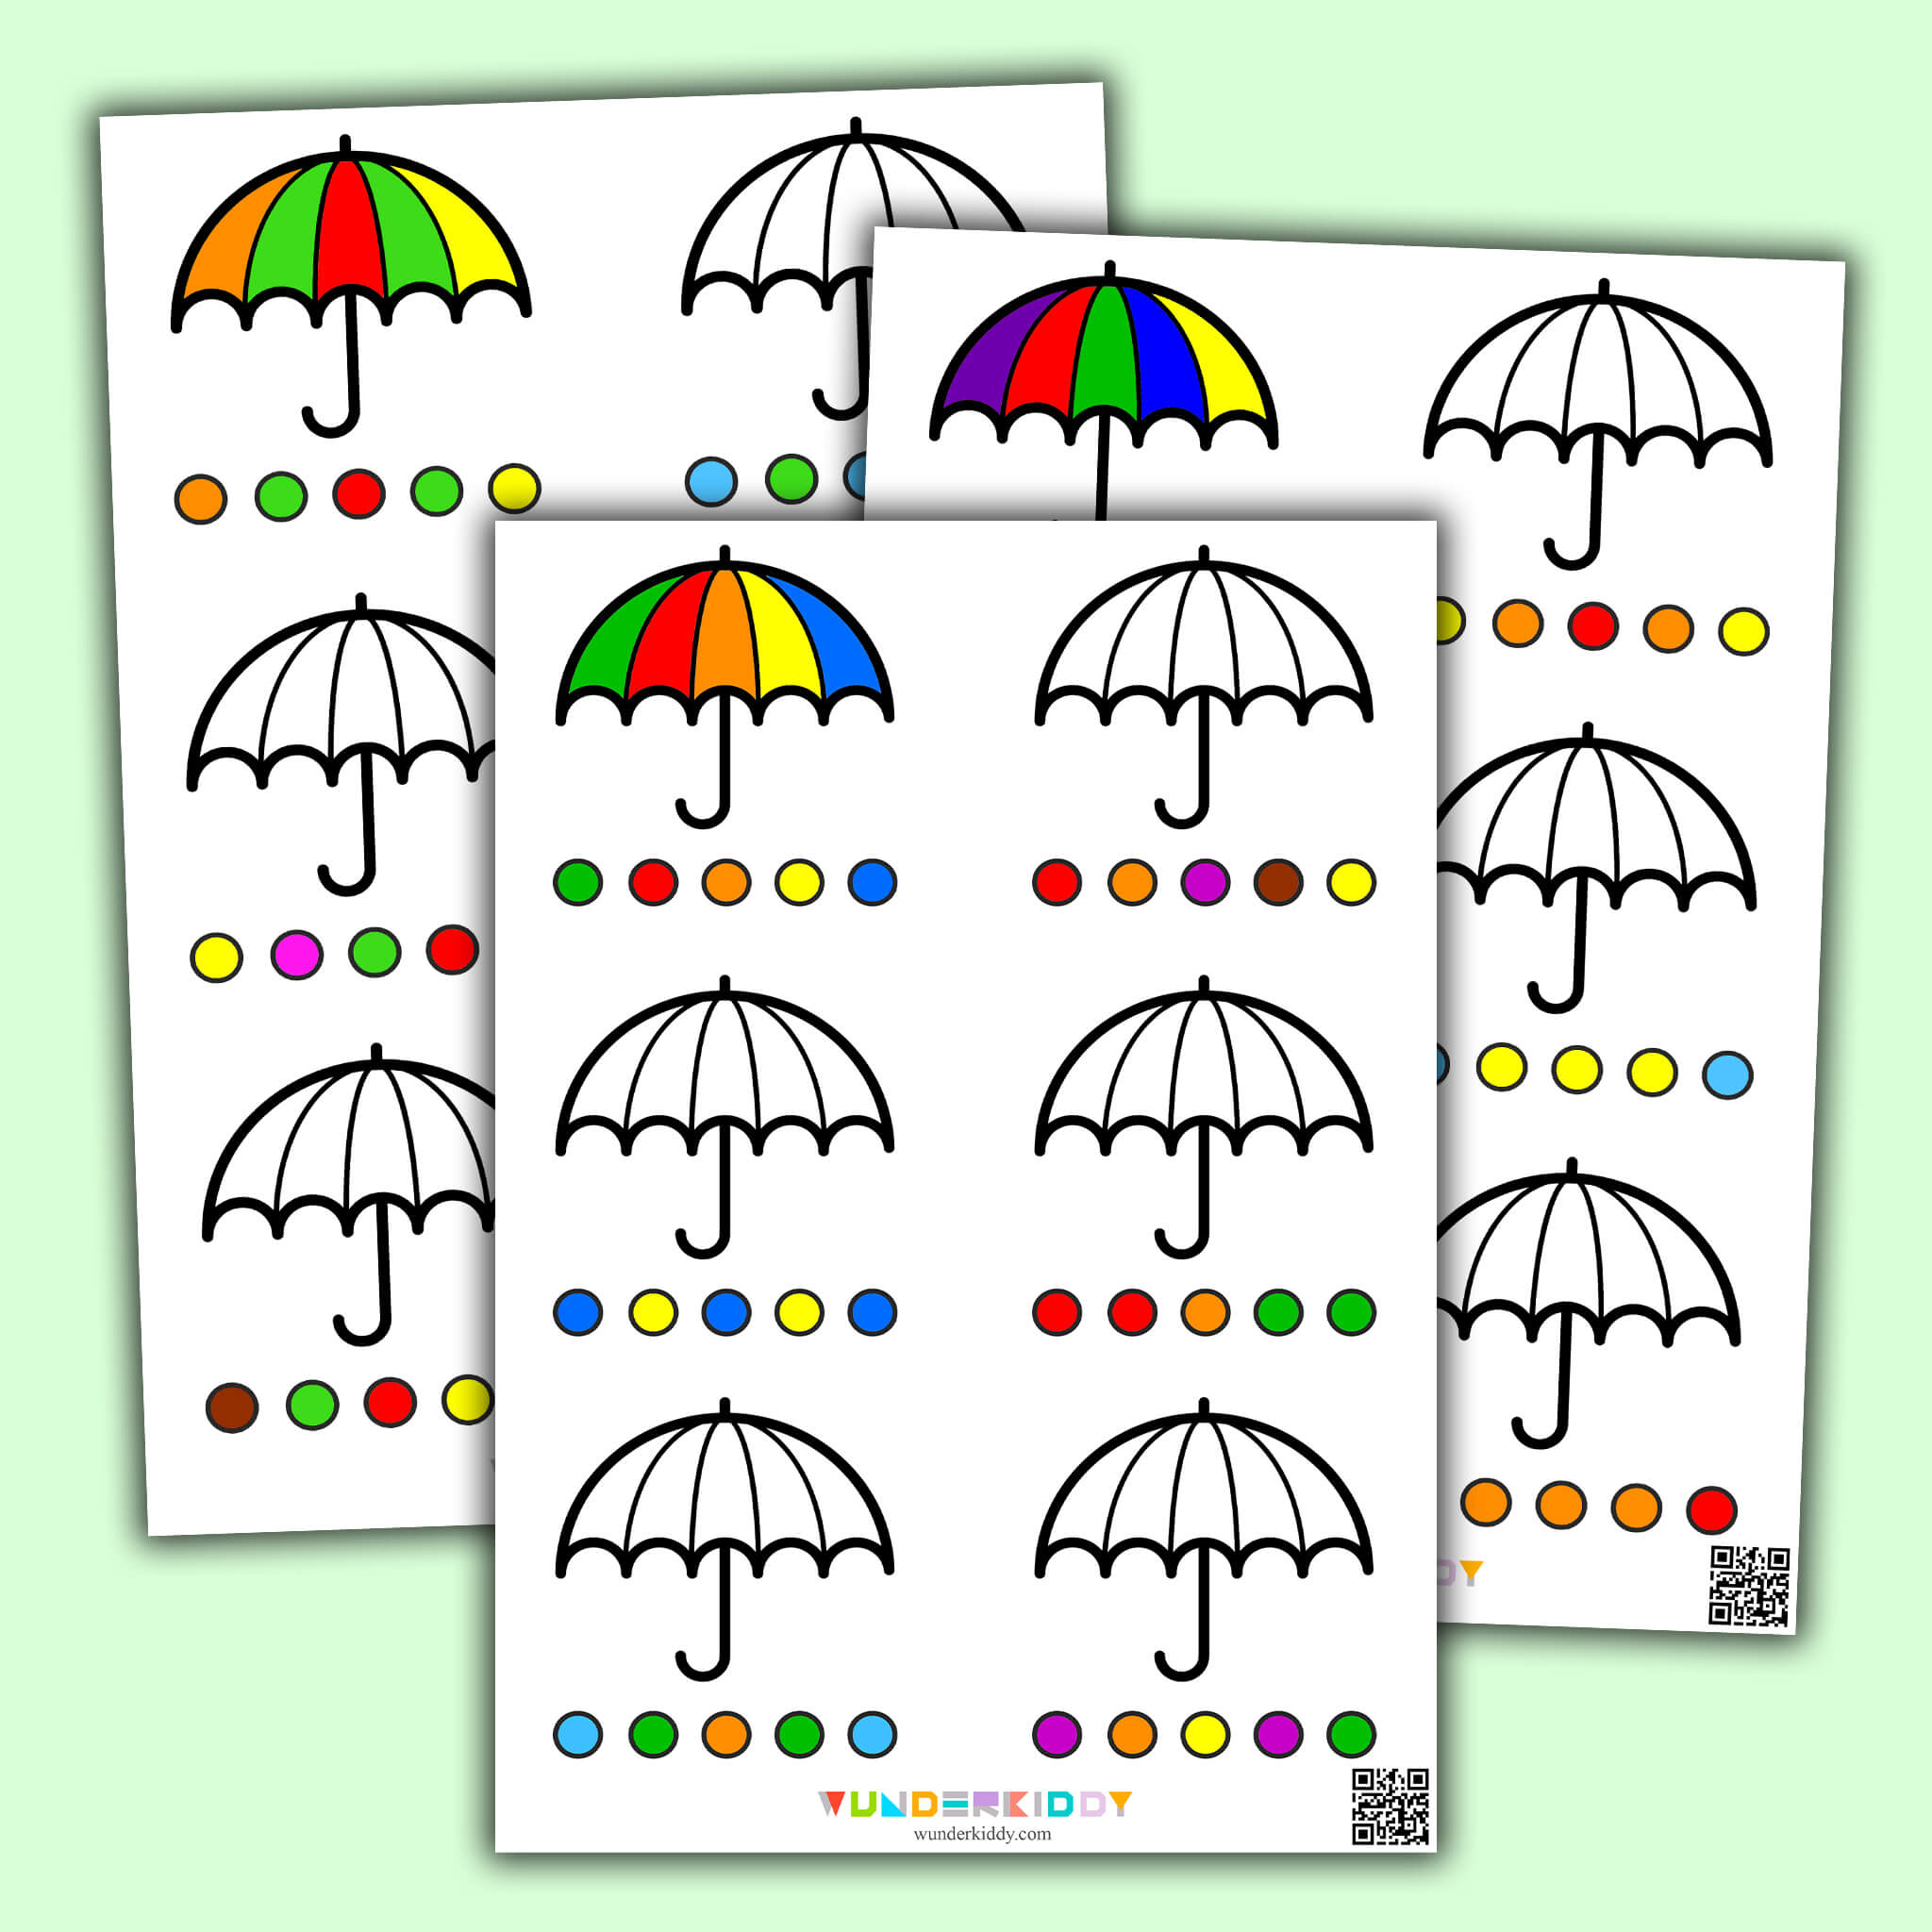 Umbrella Coloring Pages